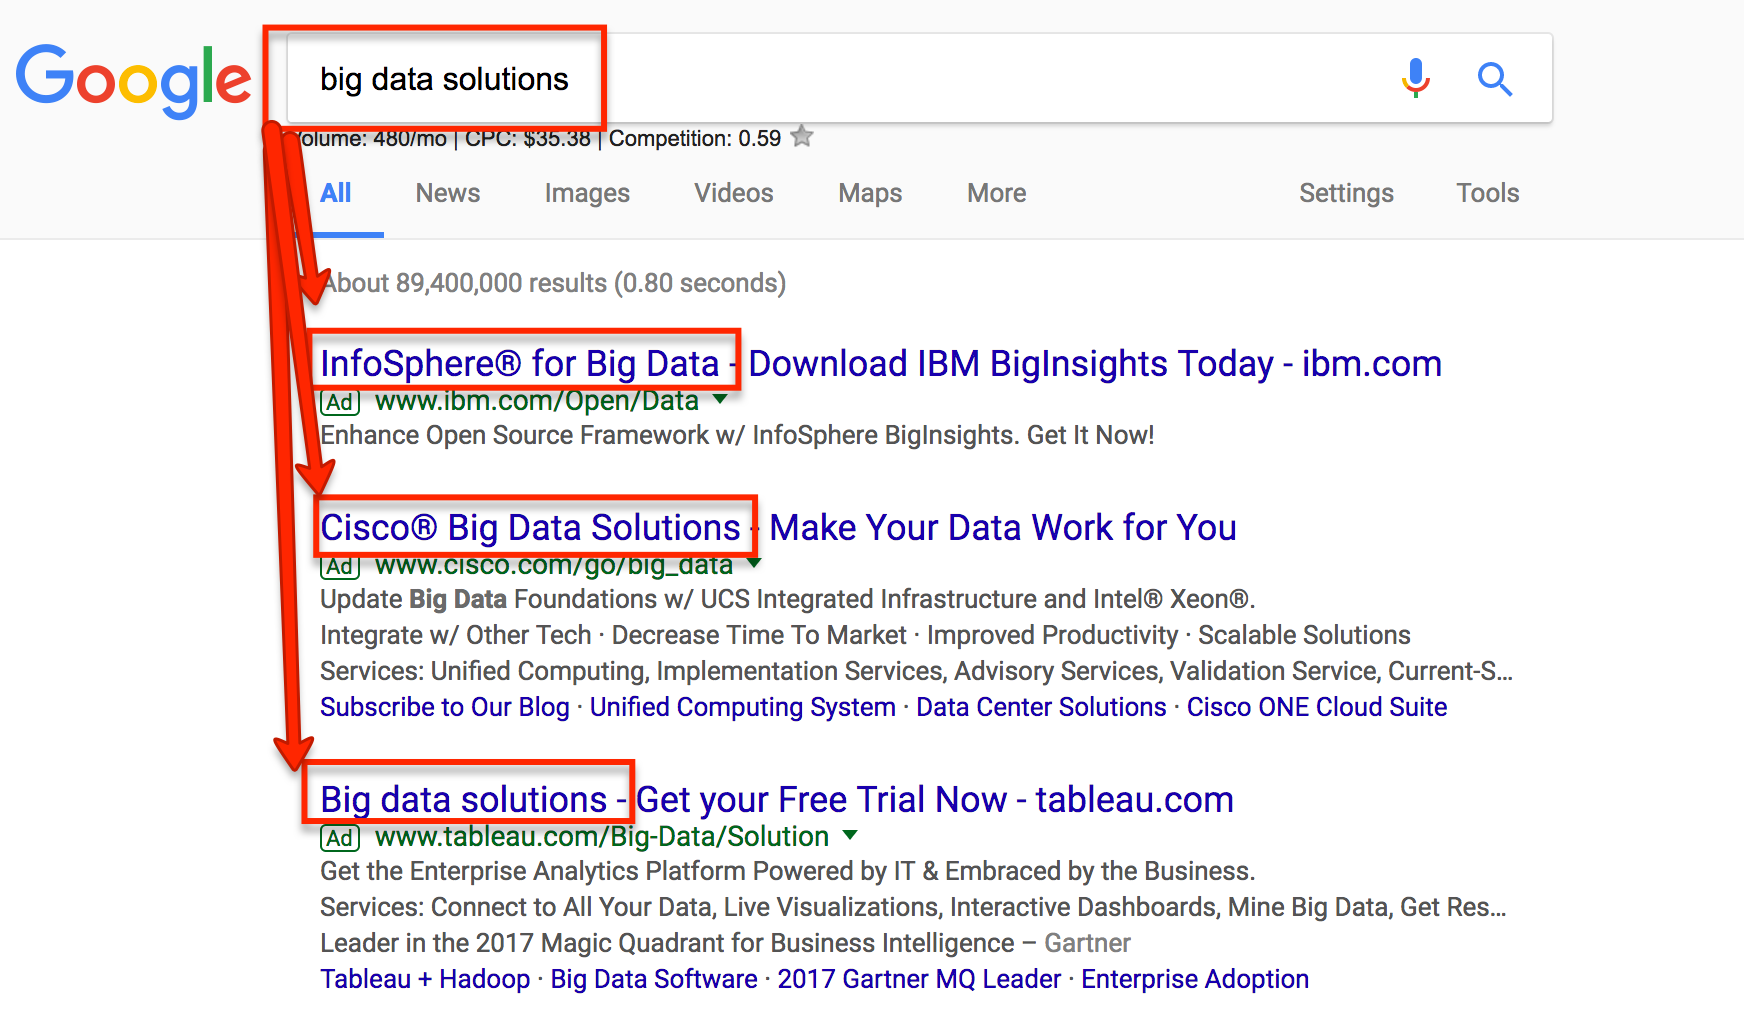 Big data solutions